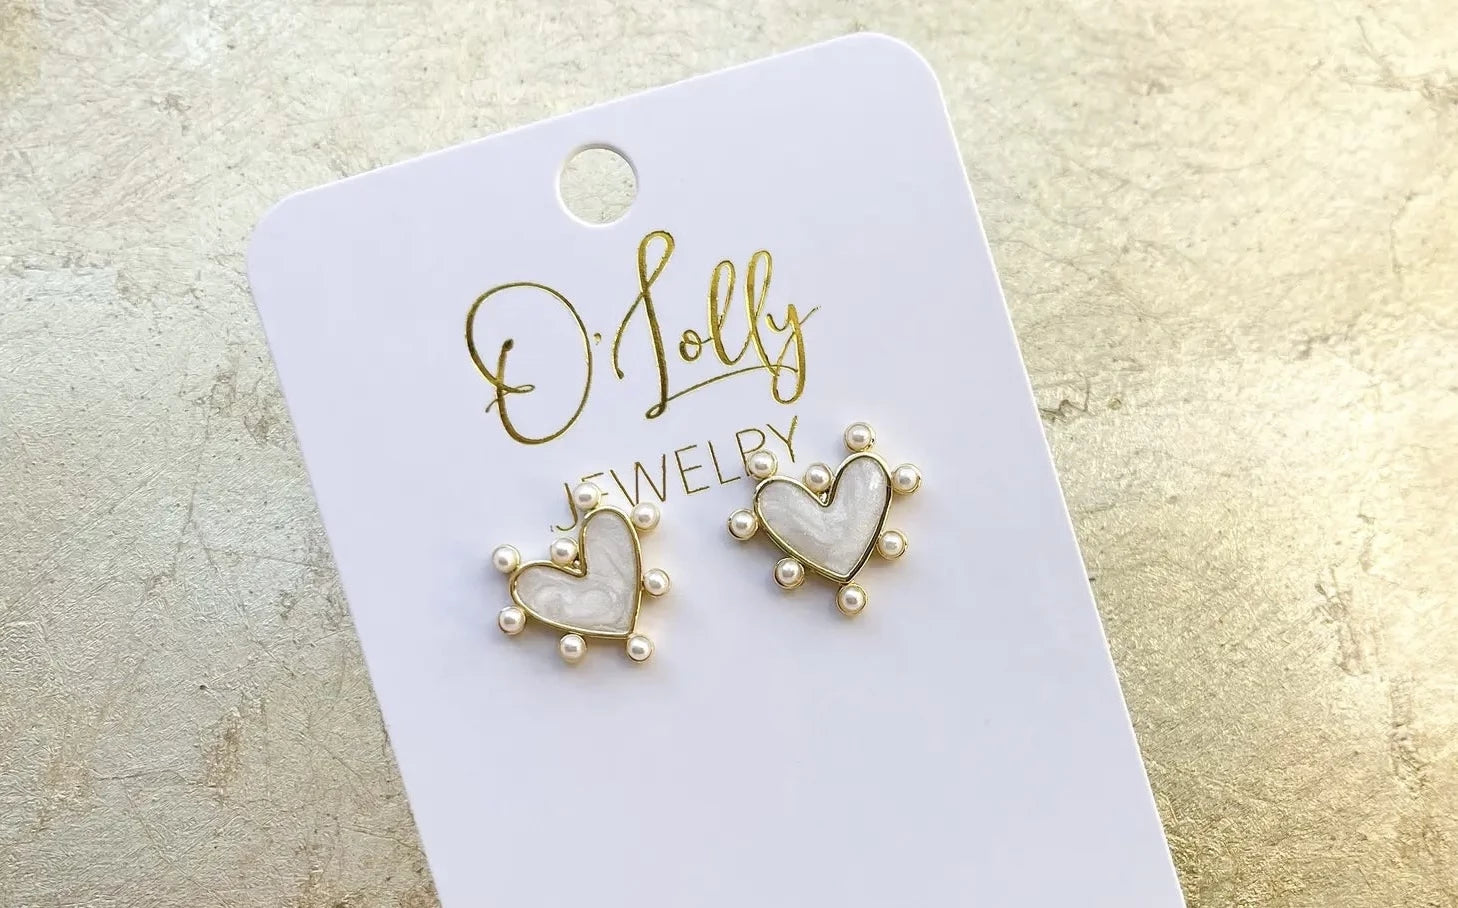 Shop our cutest earrings!